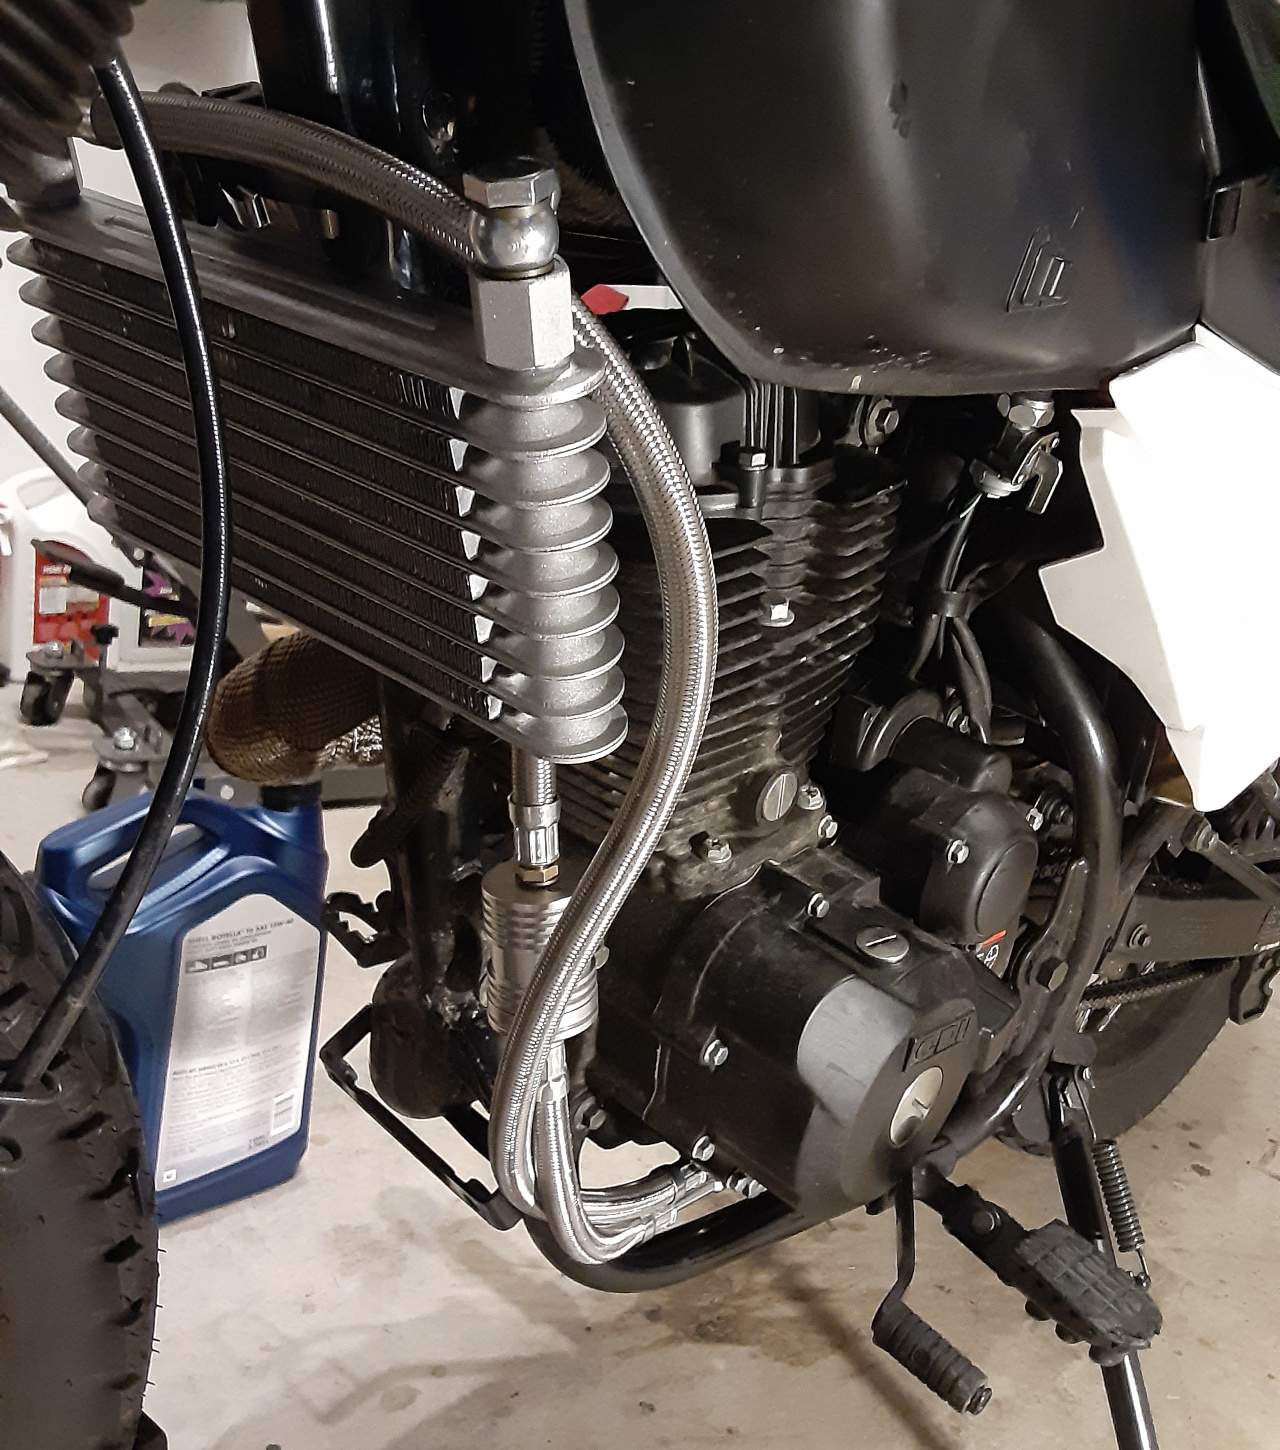 TBR7 Motorcycle Oil Cooler.